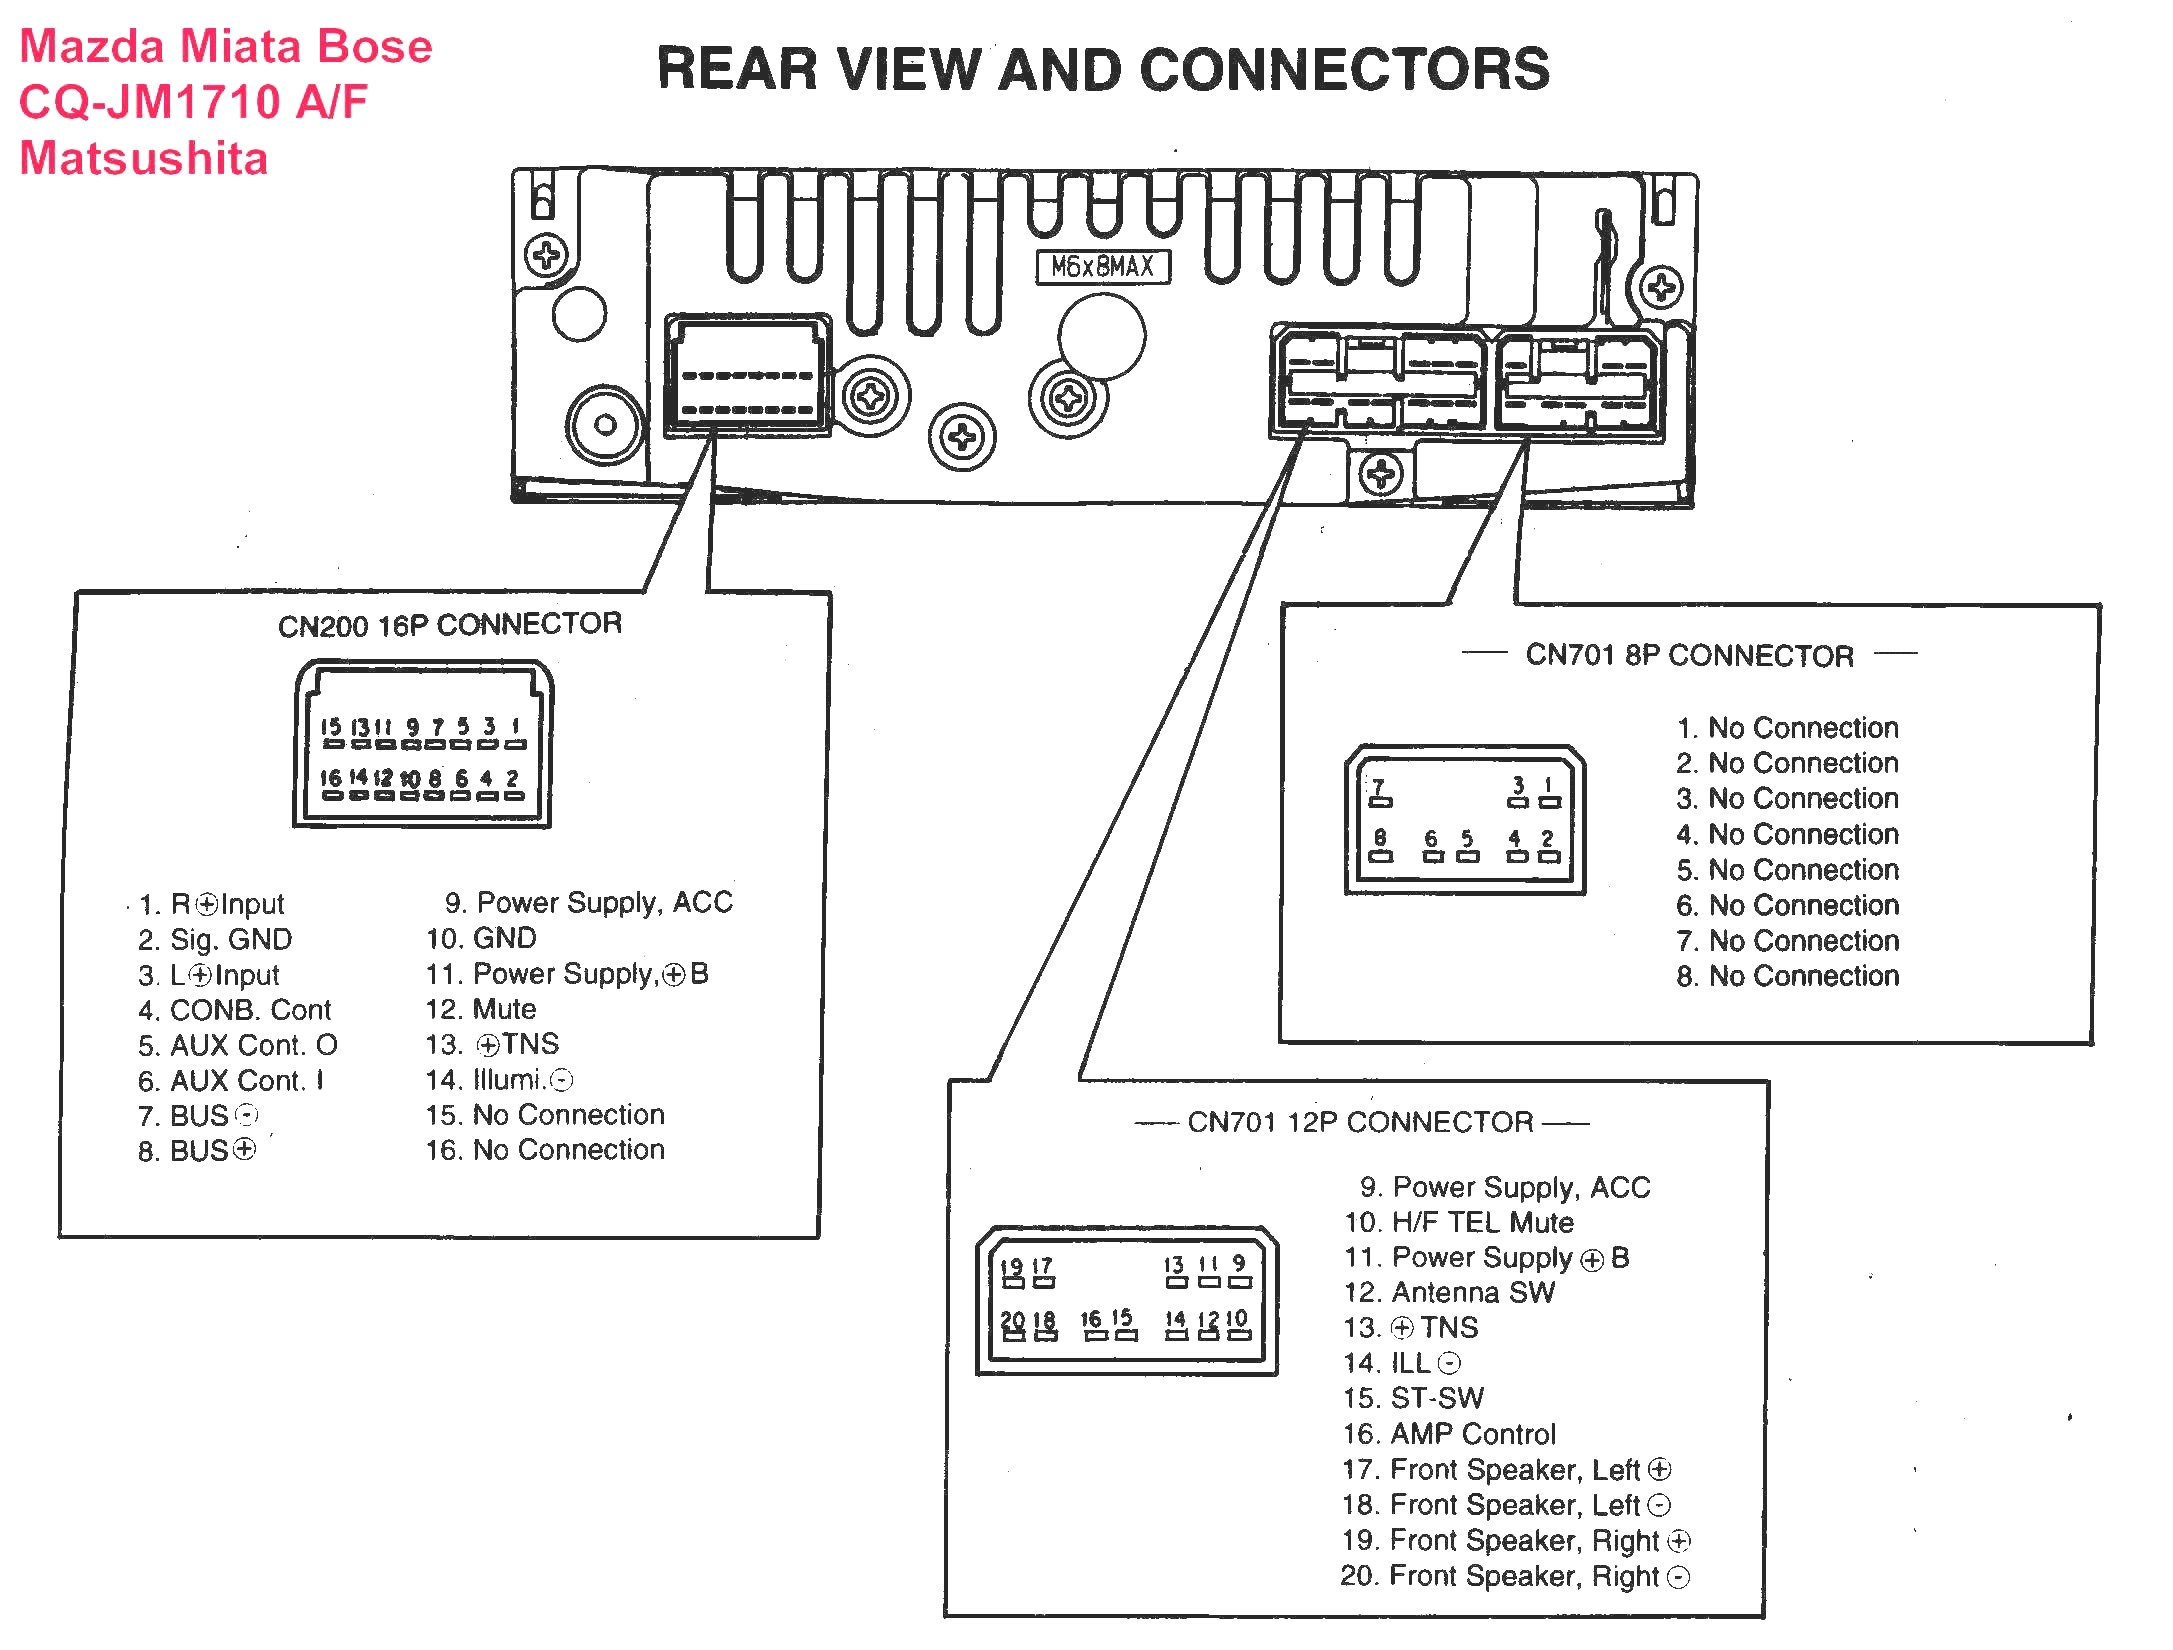 wiring diagram kenwood bt755hd wiring diagrams konsultwiring diagram kenwood bt755hd wiring diagrams wiring diagram kenwood bt